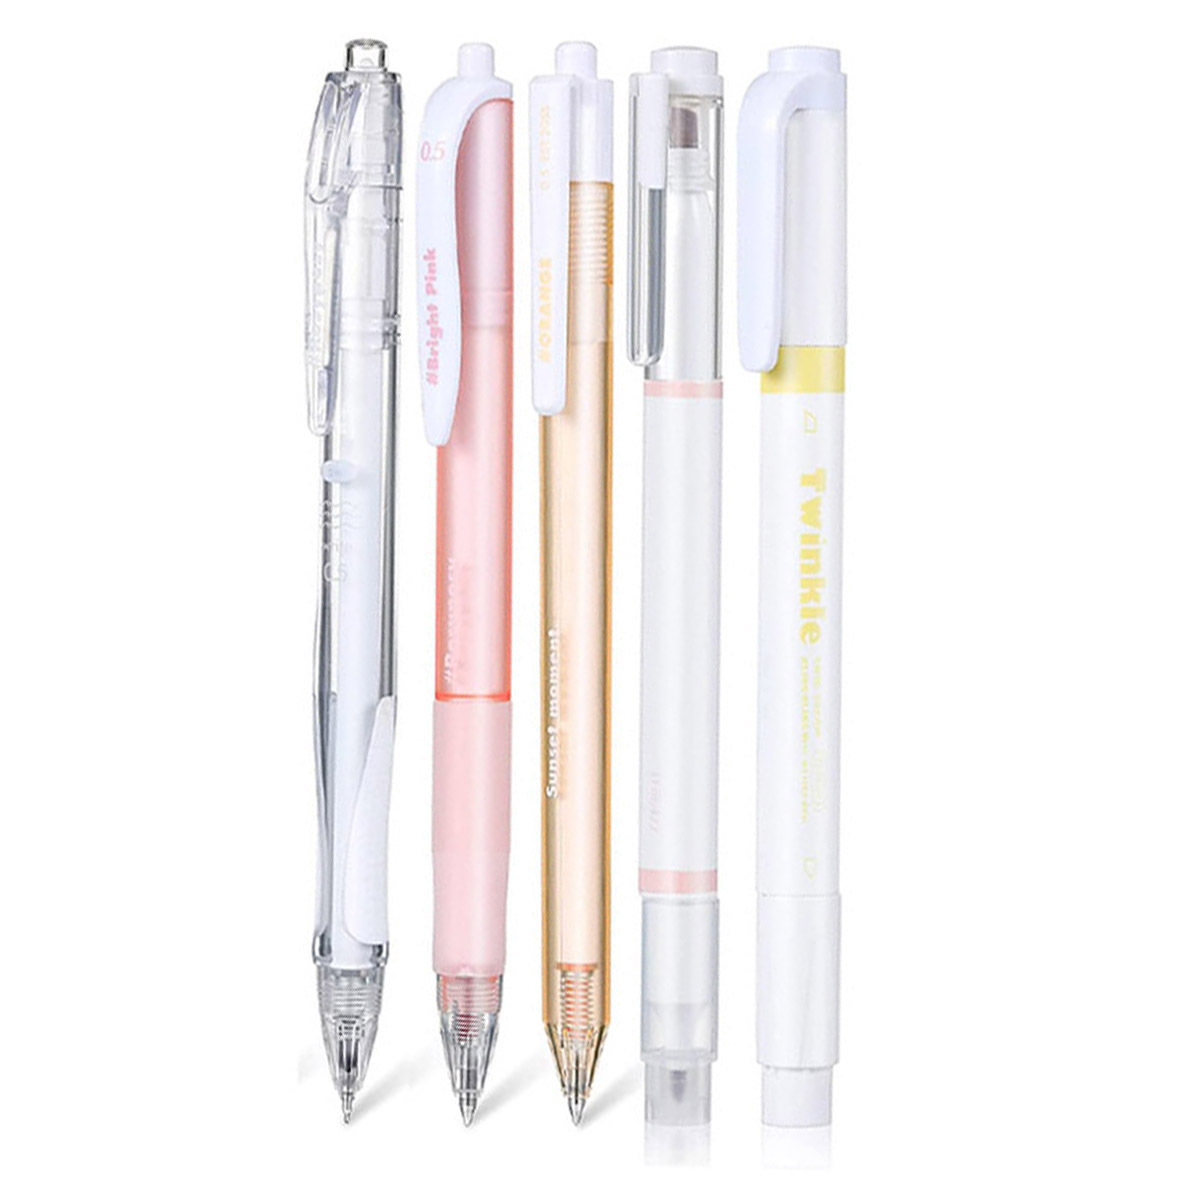 5pcs Pastel Gel Ink Pen Set,3Pcs Black Ink Pens with 2pcs Highlighter for Writing,Cute Retractable Gel Ink Pens,Kawaii School Pens for Writing